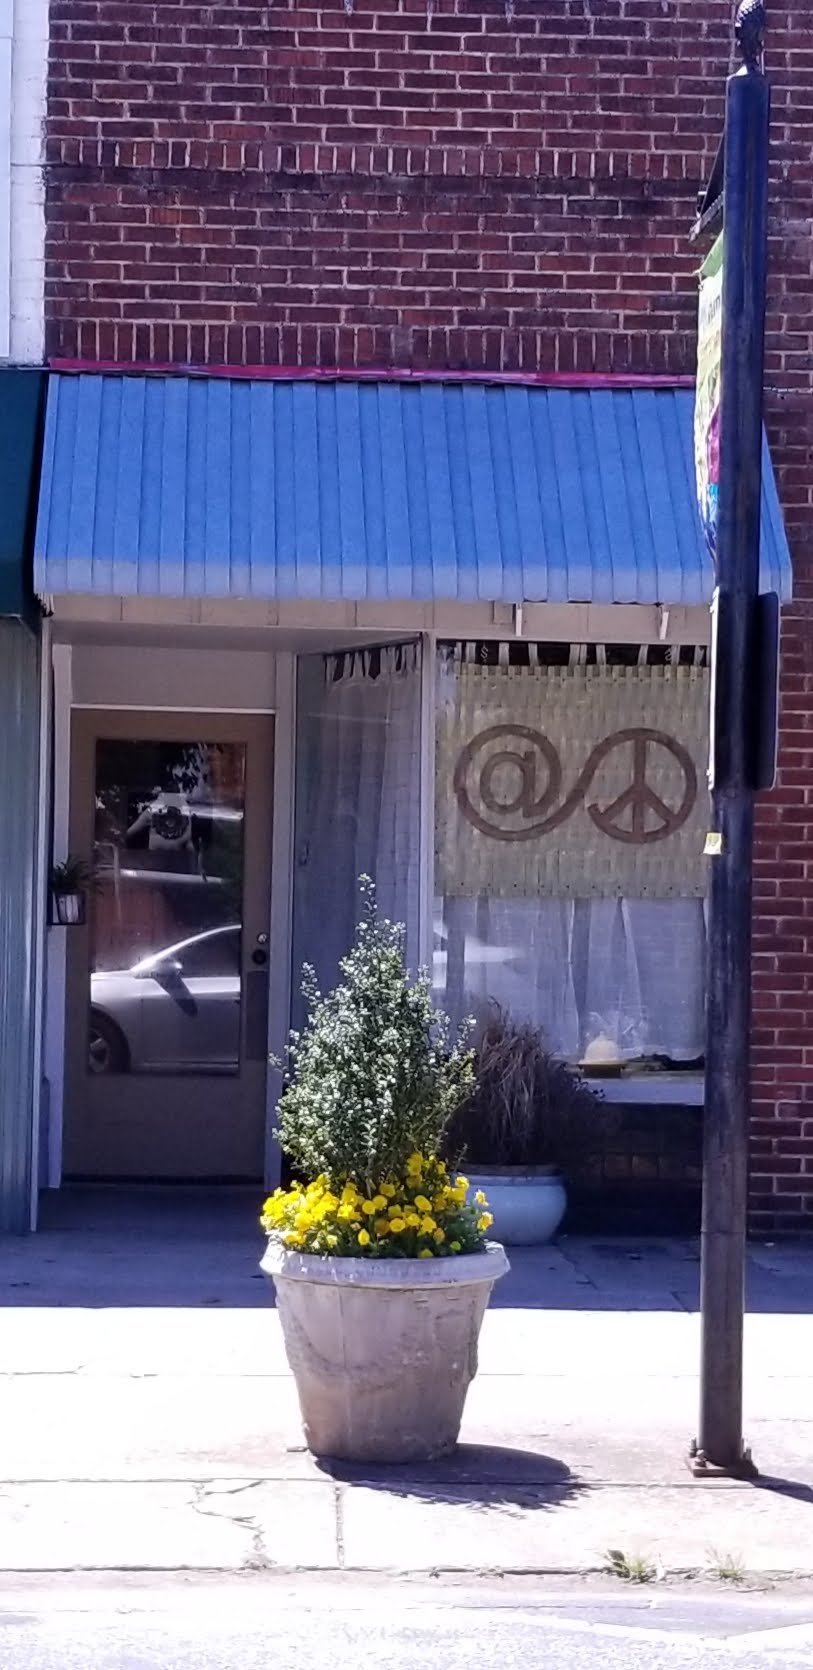 Center Peace 119 W Main St, Spindale North Carolina 28160